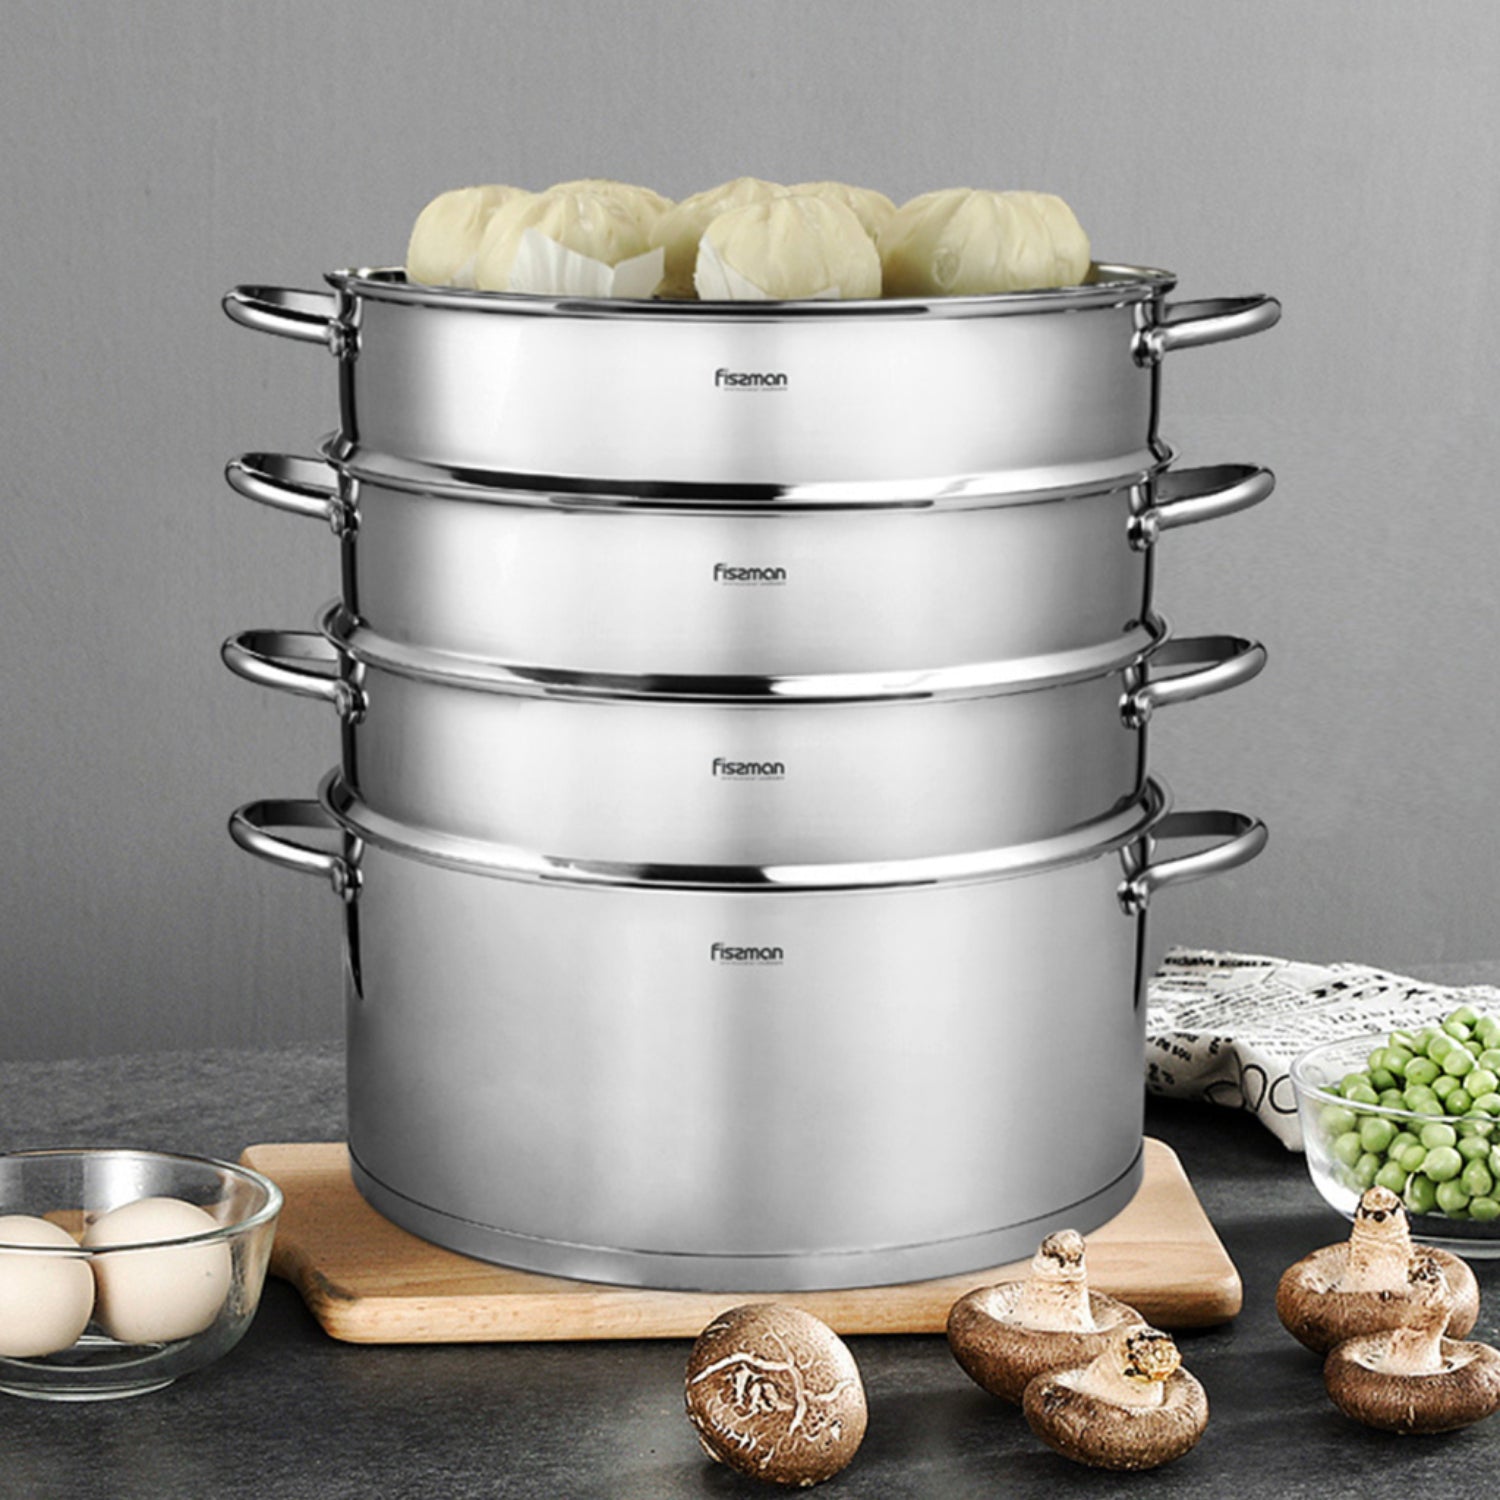 Fissman Stainless Steamer Stock Pot with 3 Steamer Insert 32x15cm/12LTR – BARAKAT Multicooker, Great Accessory for Steaming Vegetables Fruits Eggs